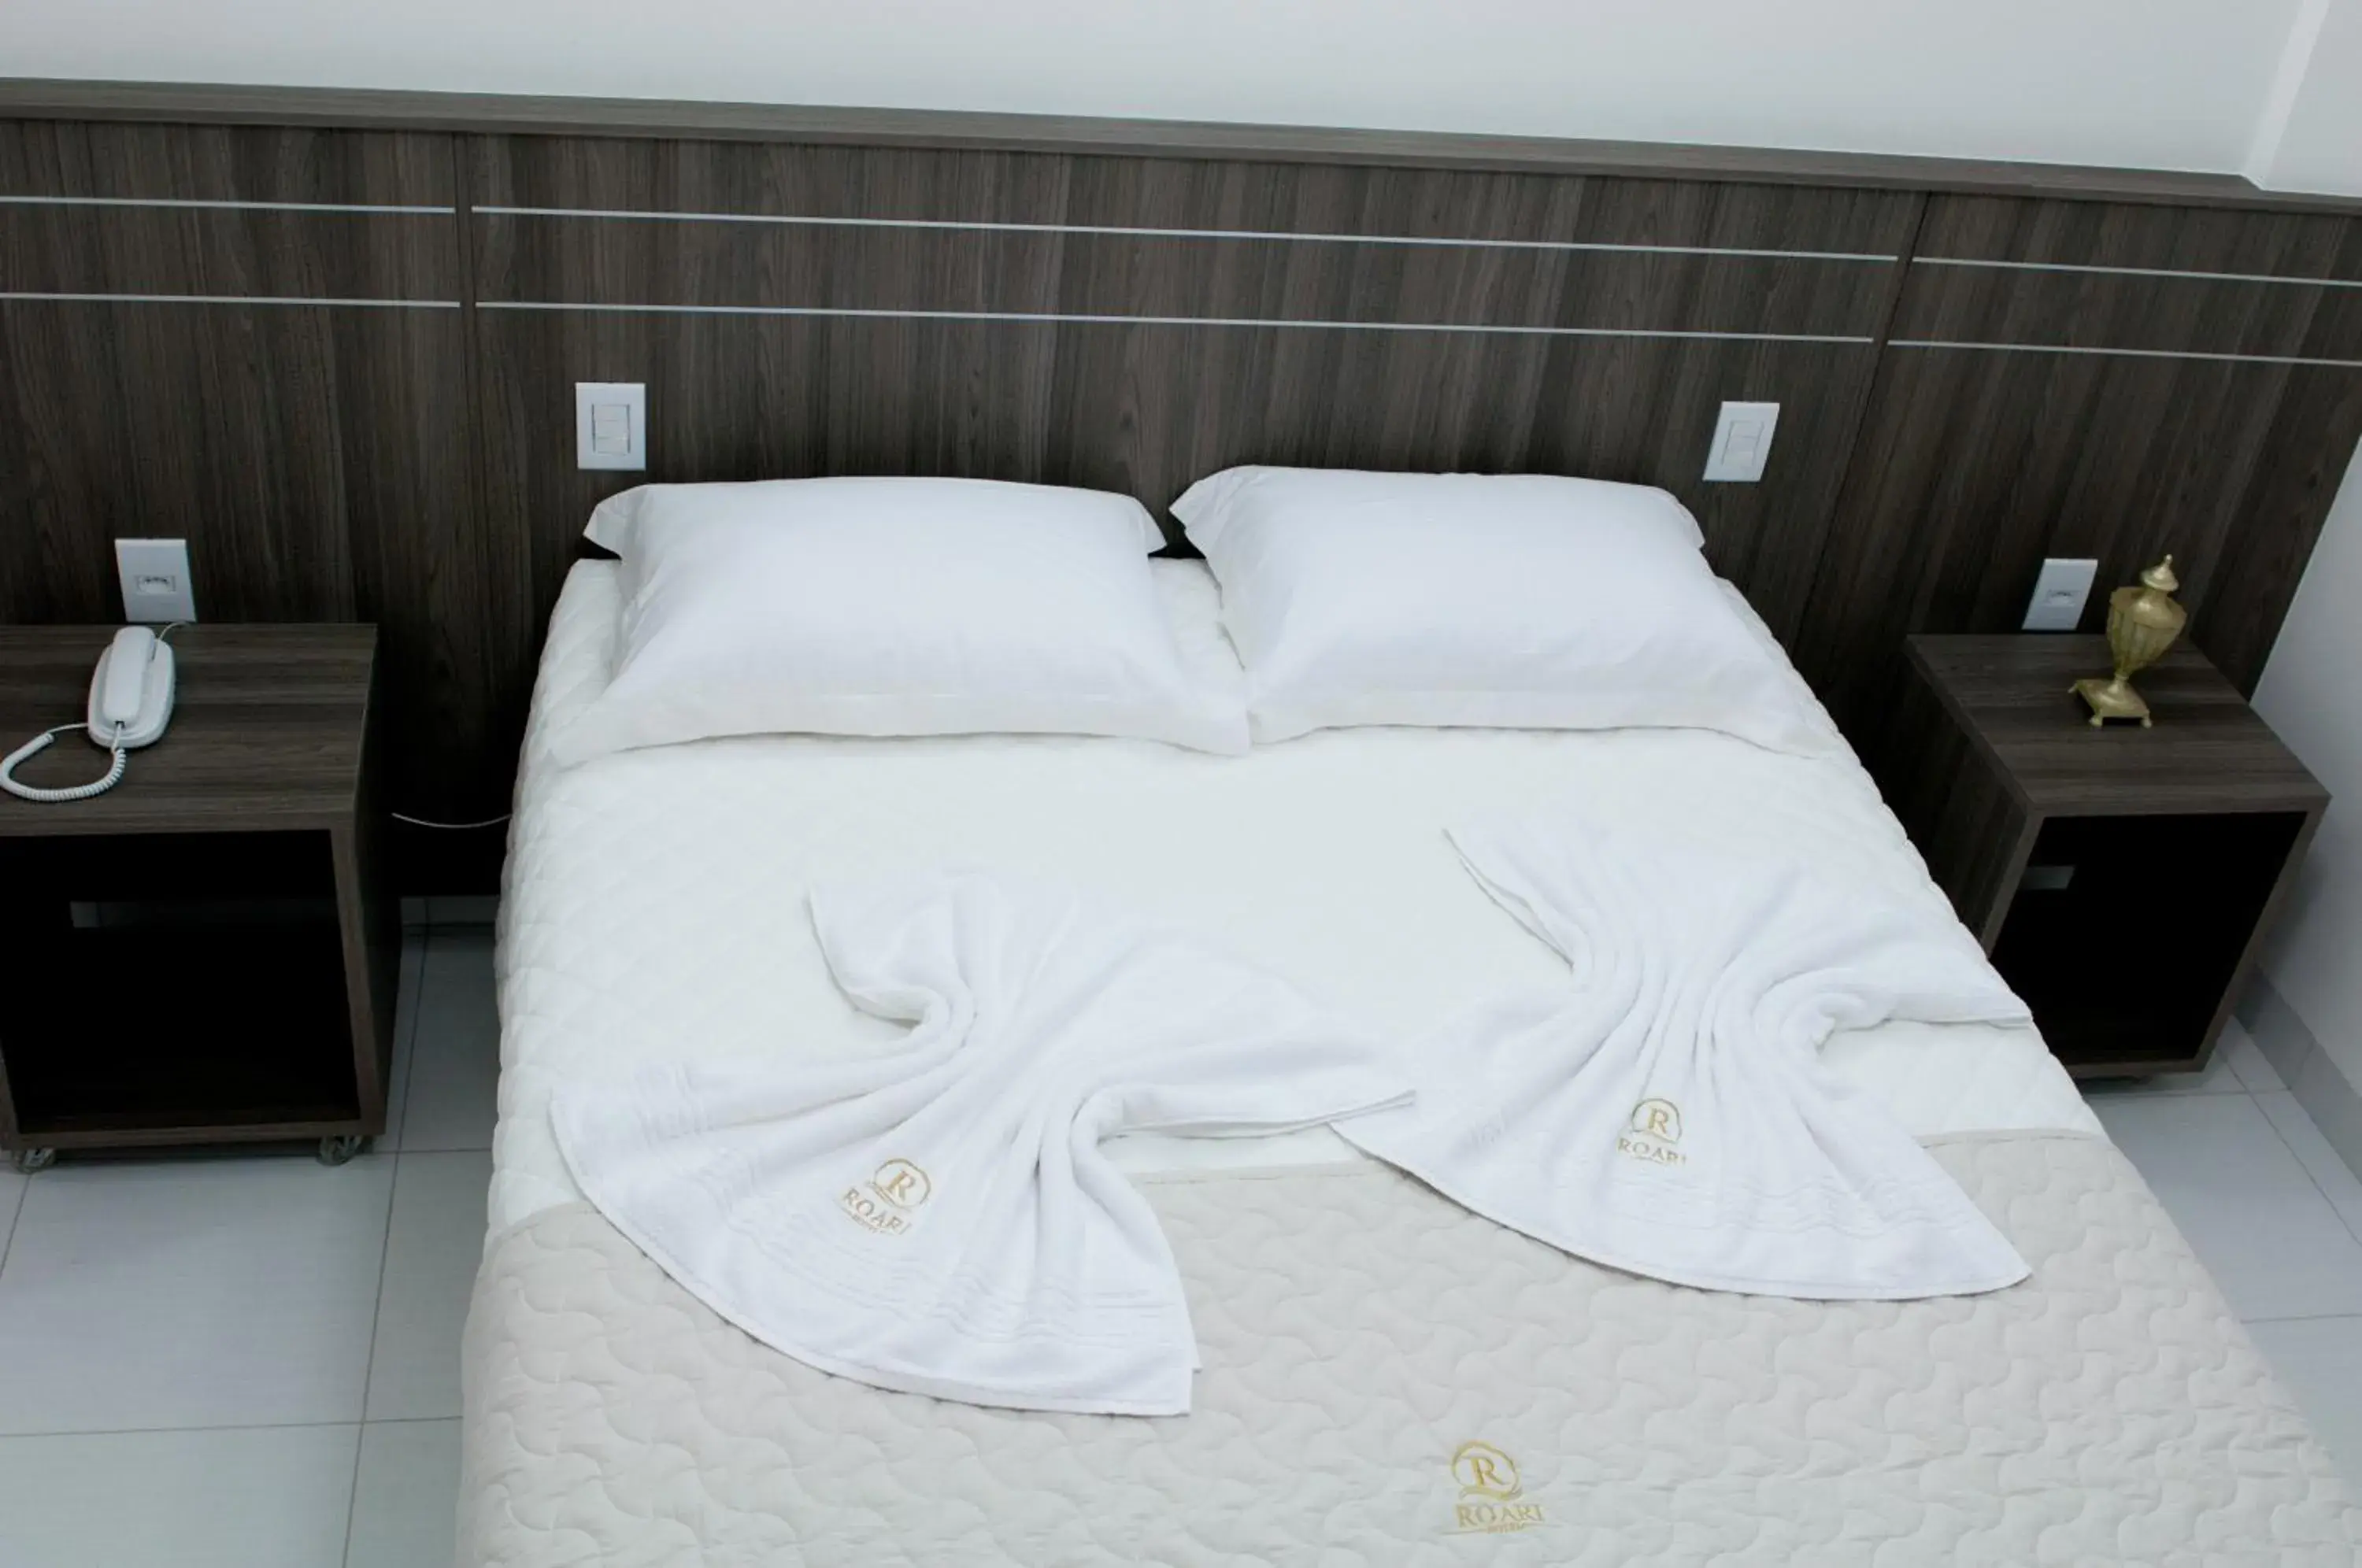 Bed in Hotel Roari